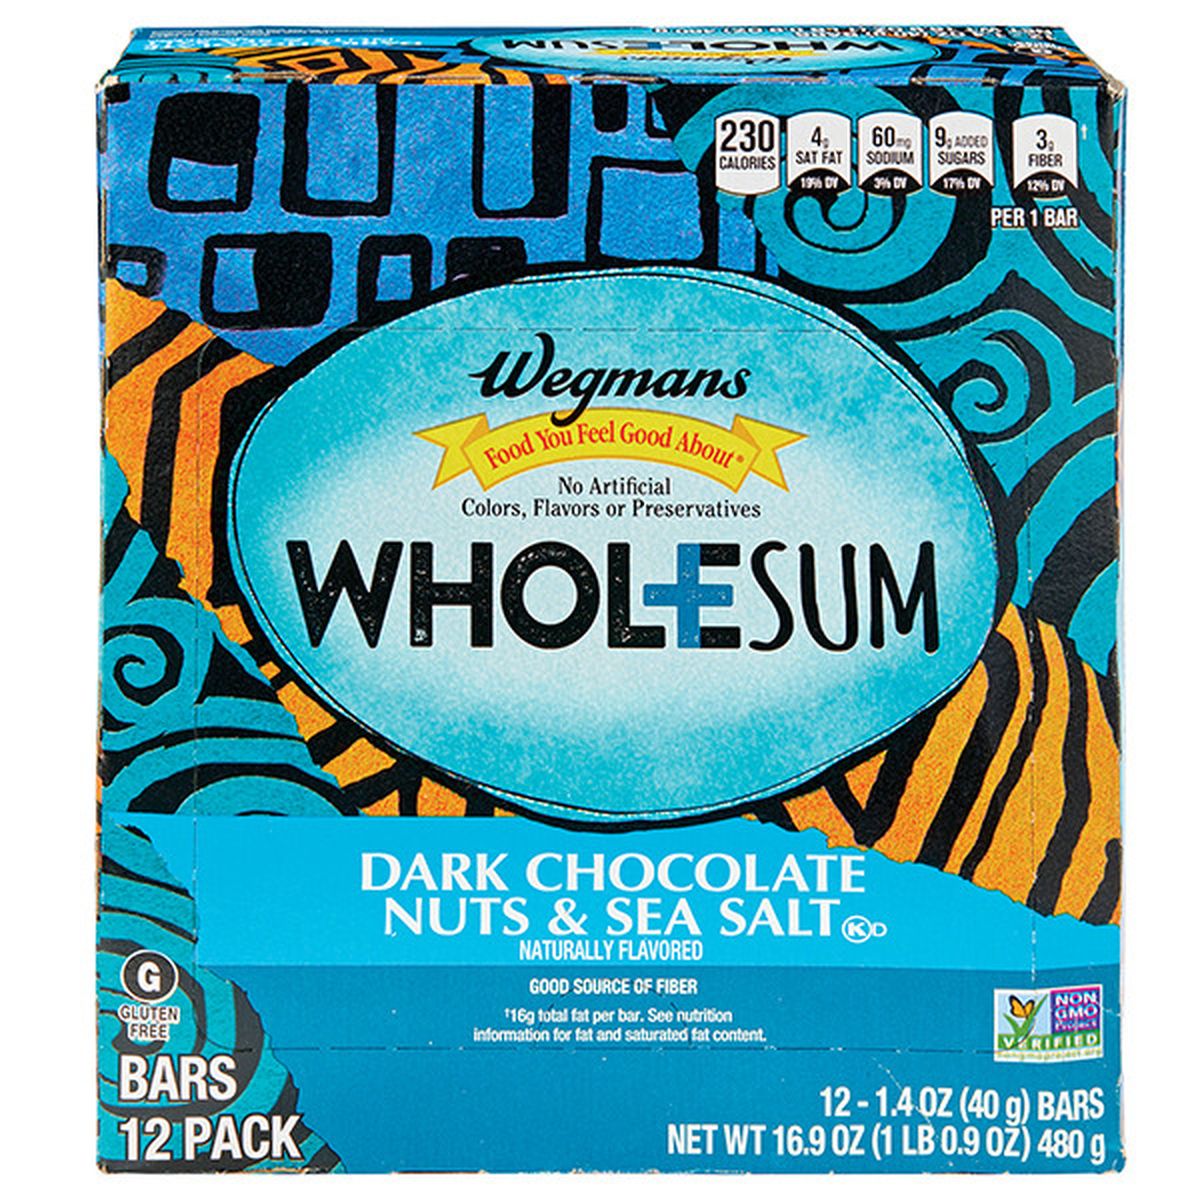 Calories in Wegmans Dark Chocolate Nuts & Sea Salt Wholesum Bar 12ct box